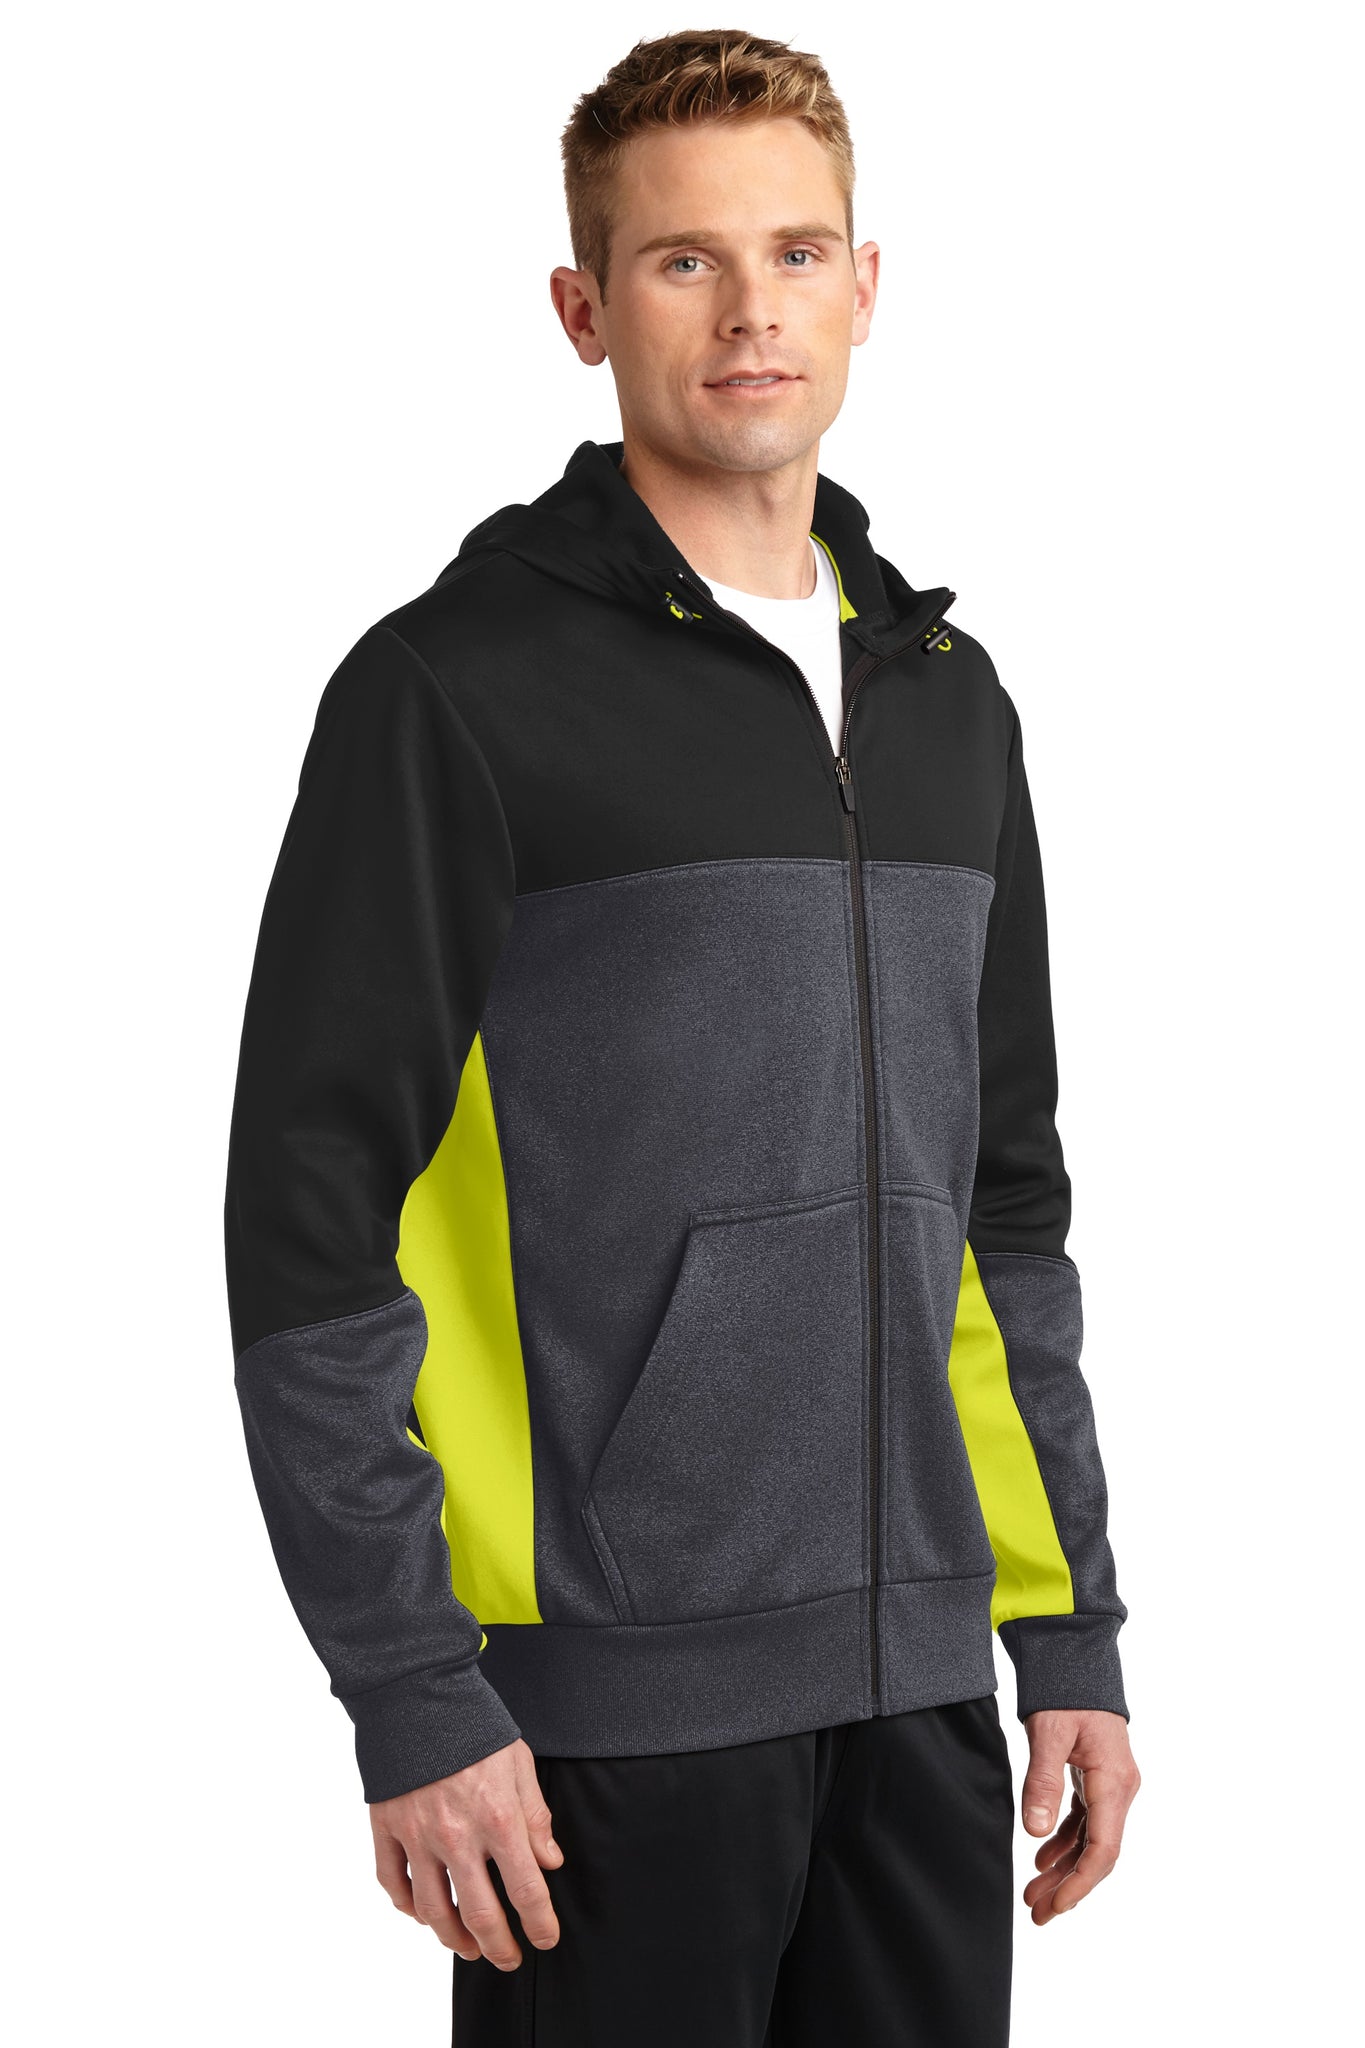 Sport-Tek Tech Fleece Colorblock Hooded Sweatshirt, Product